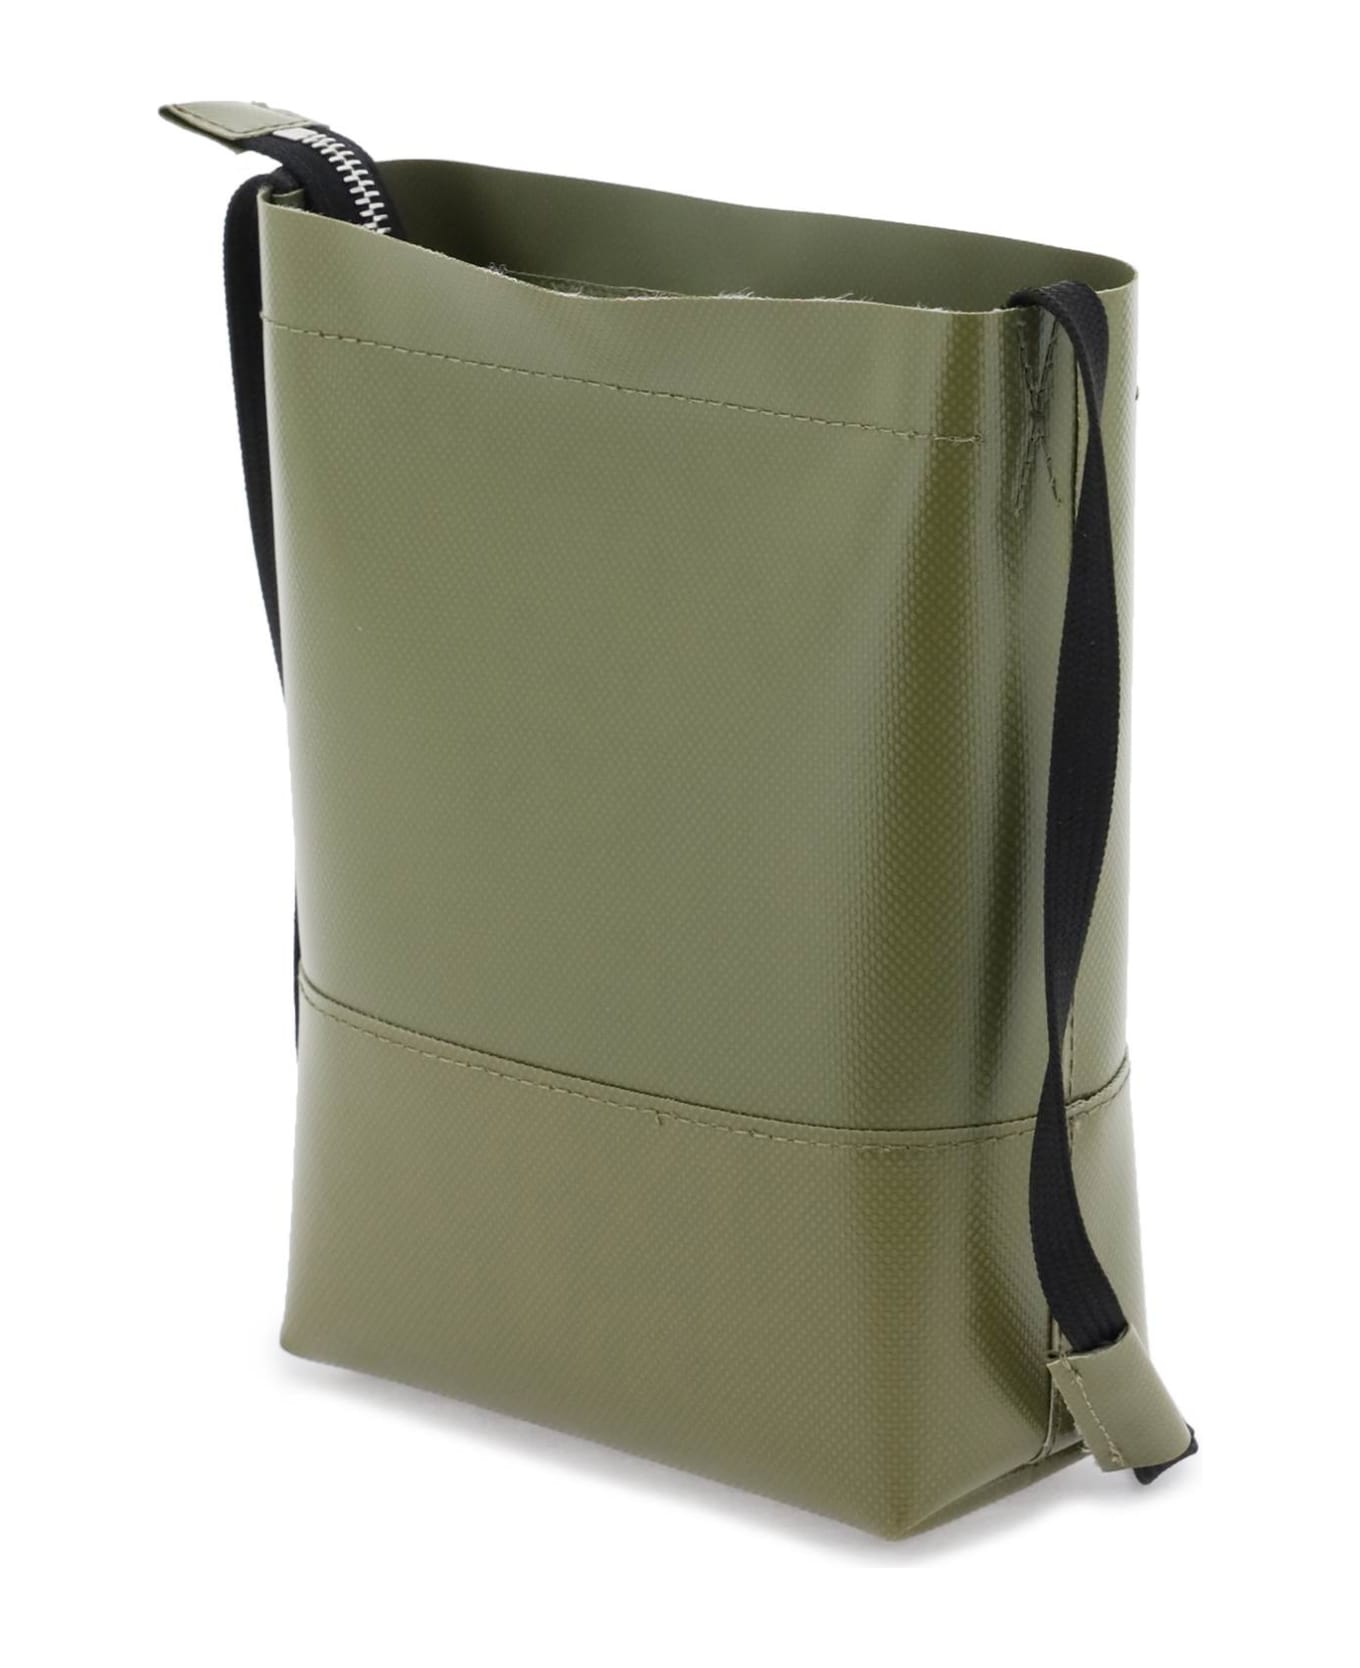 Marni Coated Canvas Crossbody Bag - LEAV GREEN (Green)